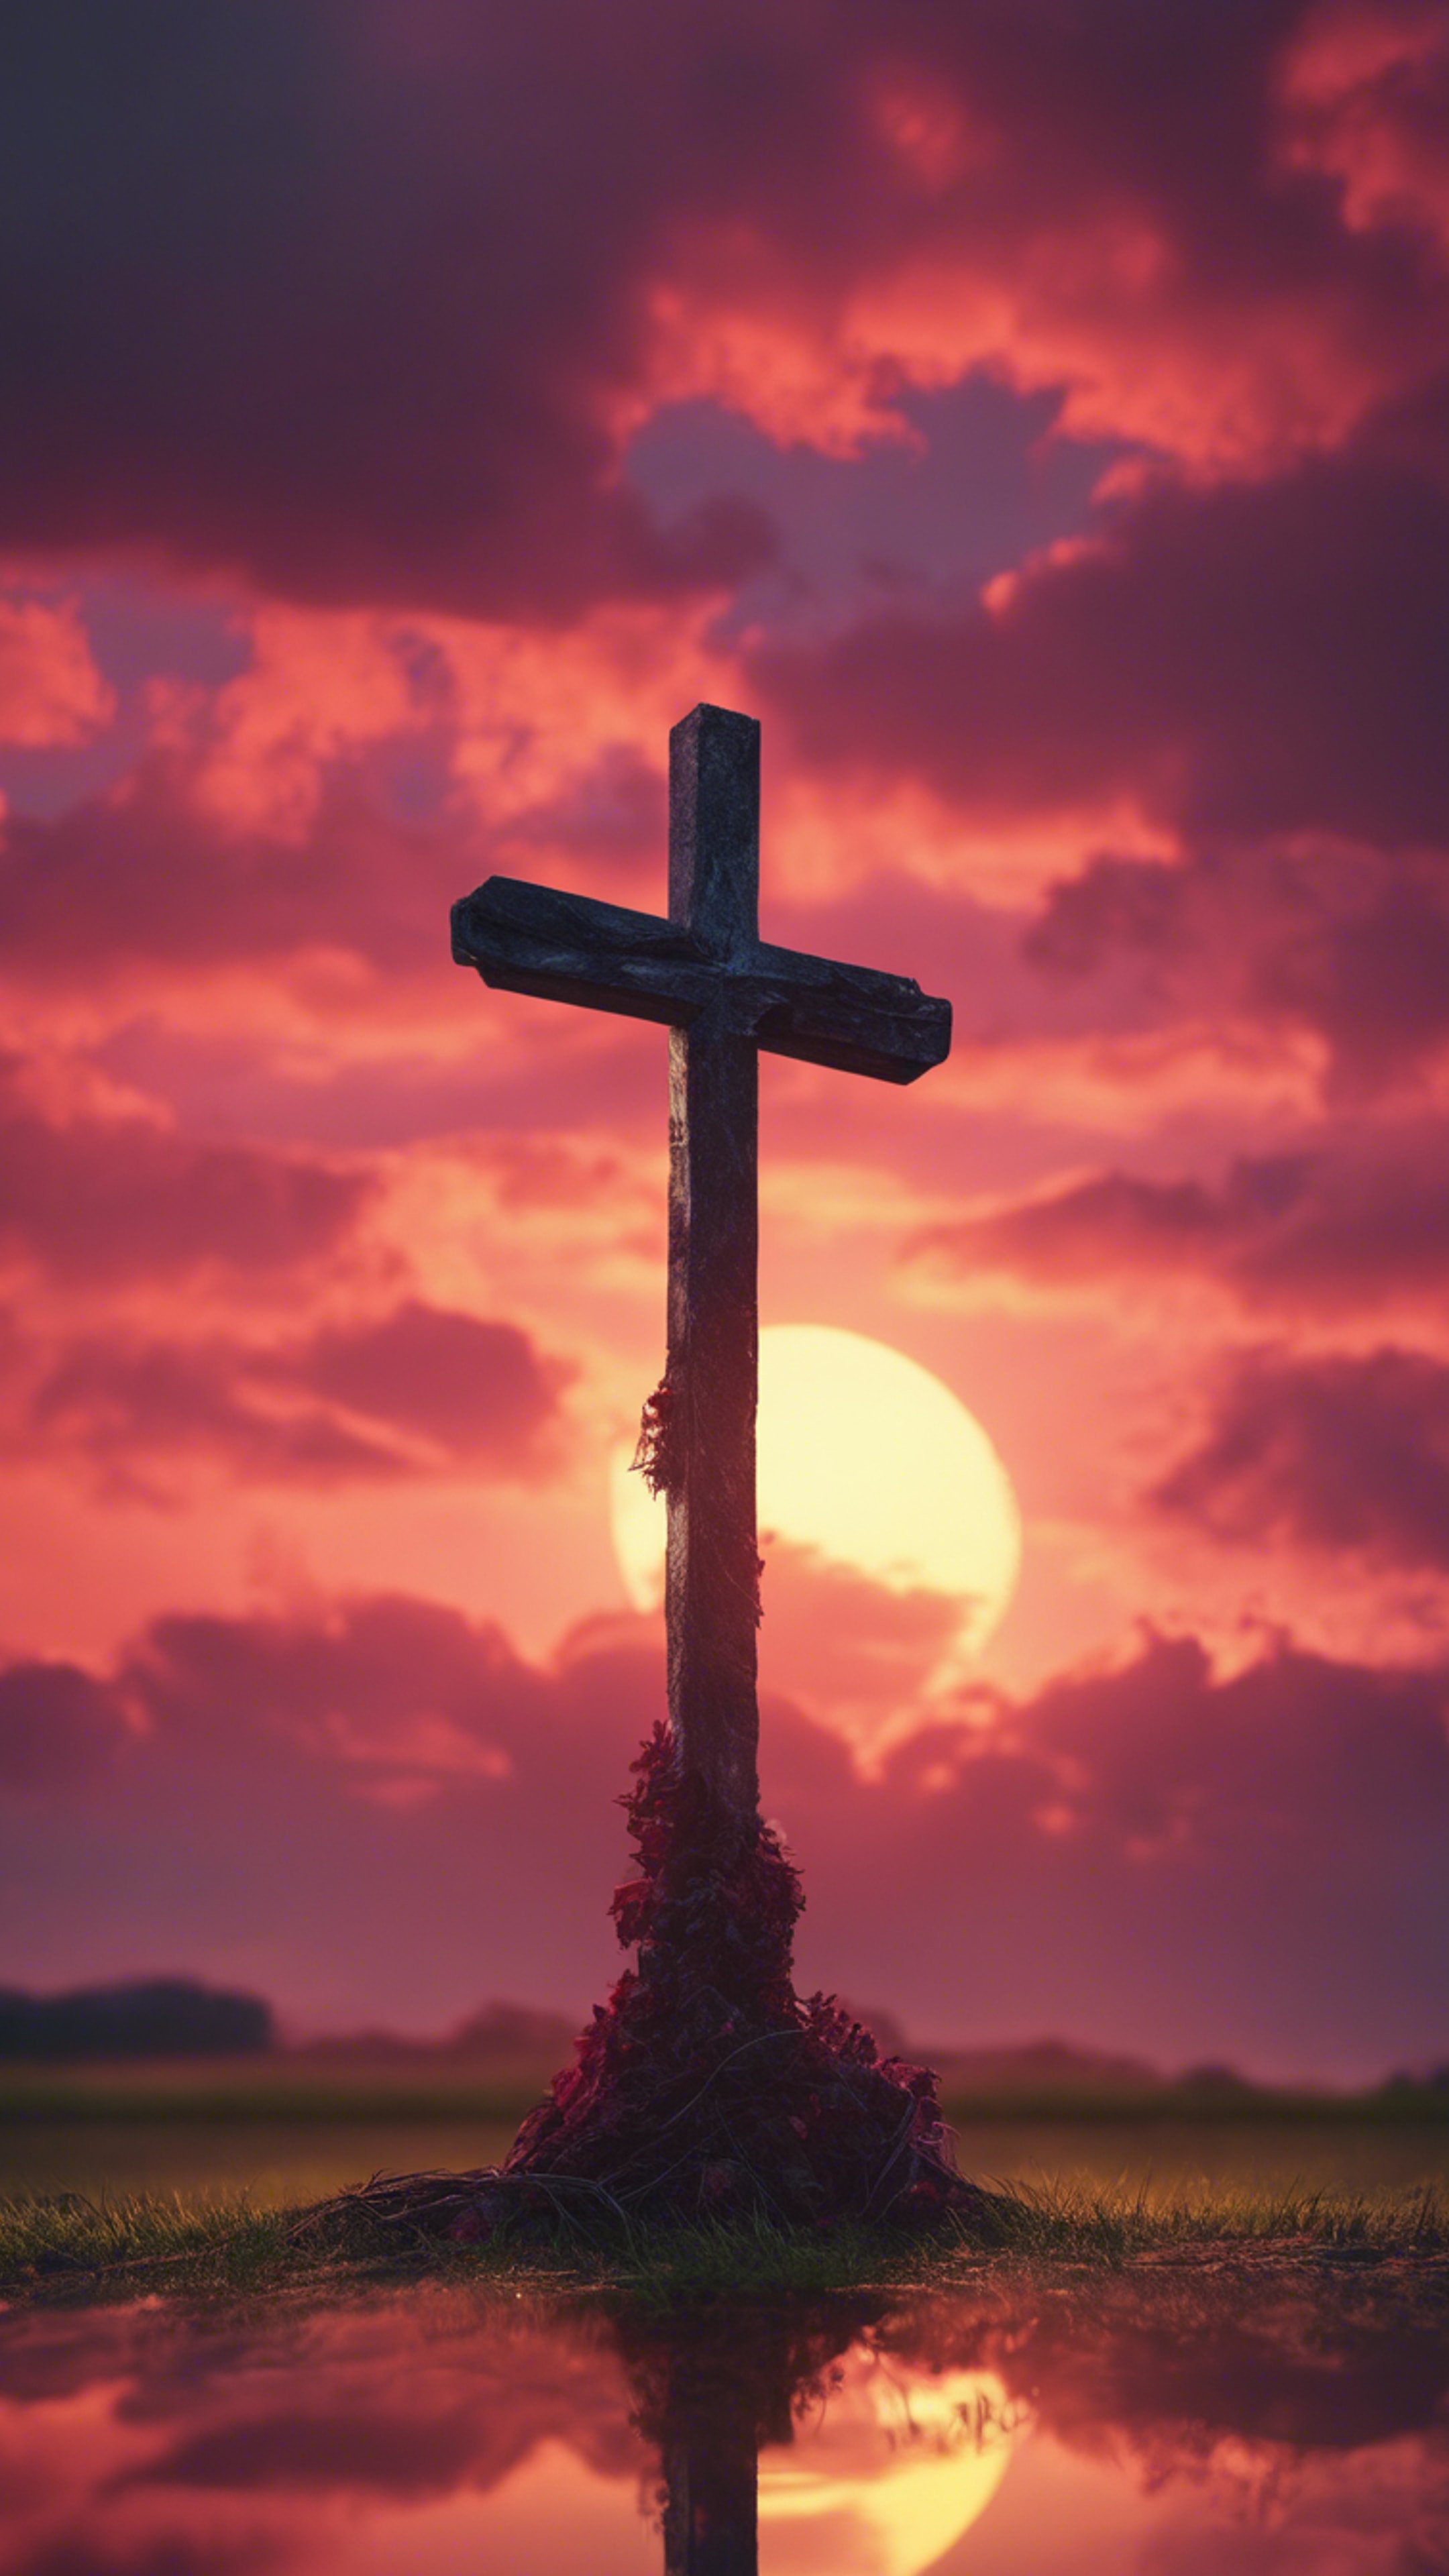 A cross standing against the crimson colors of a sunset sky.壁紙[b41808c7967b41aa9e40]